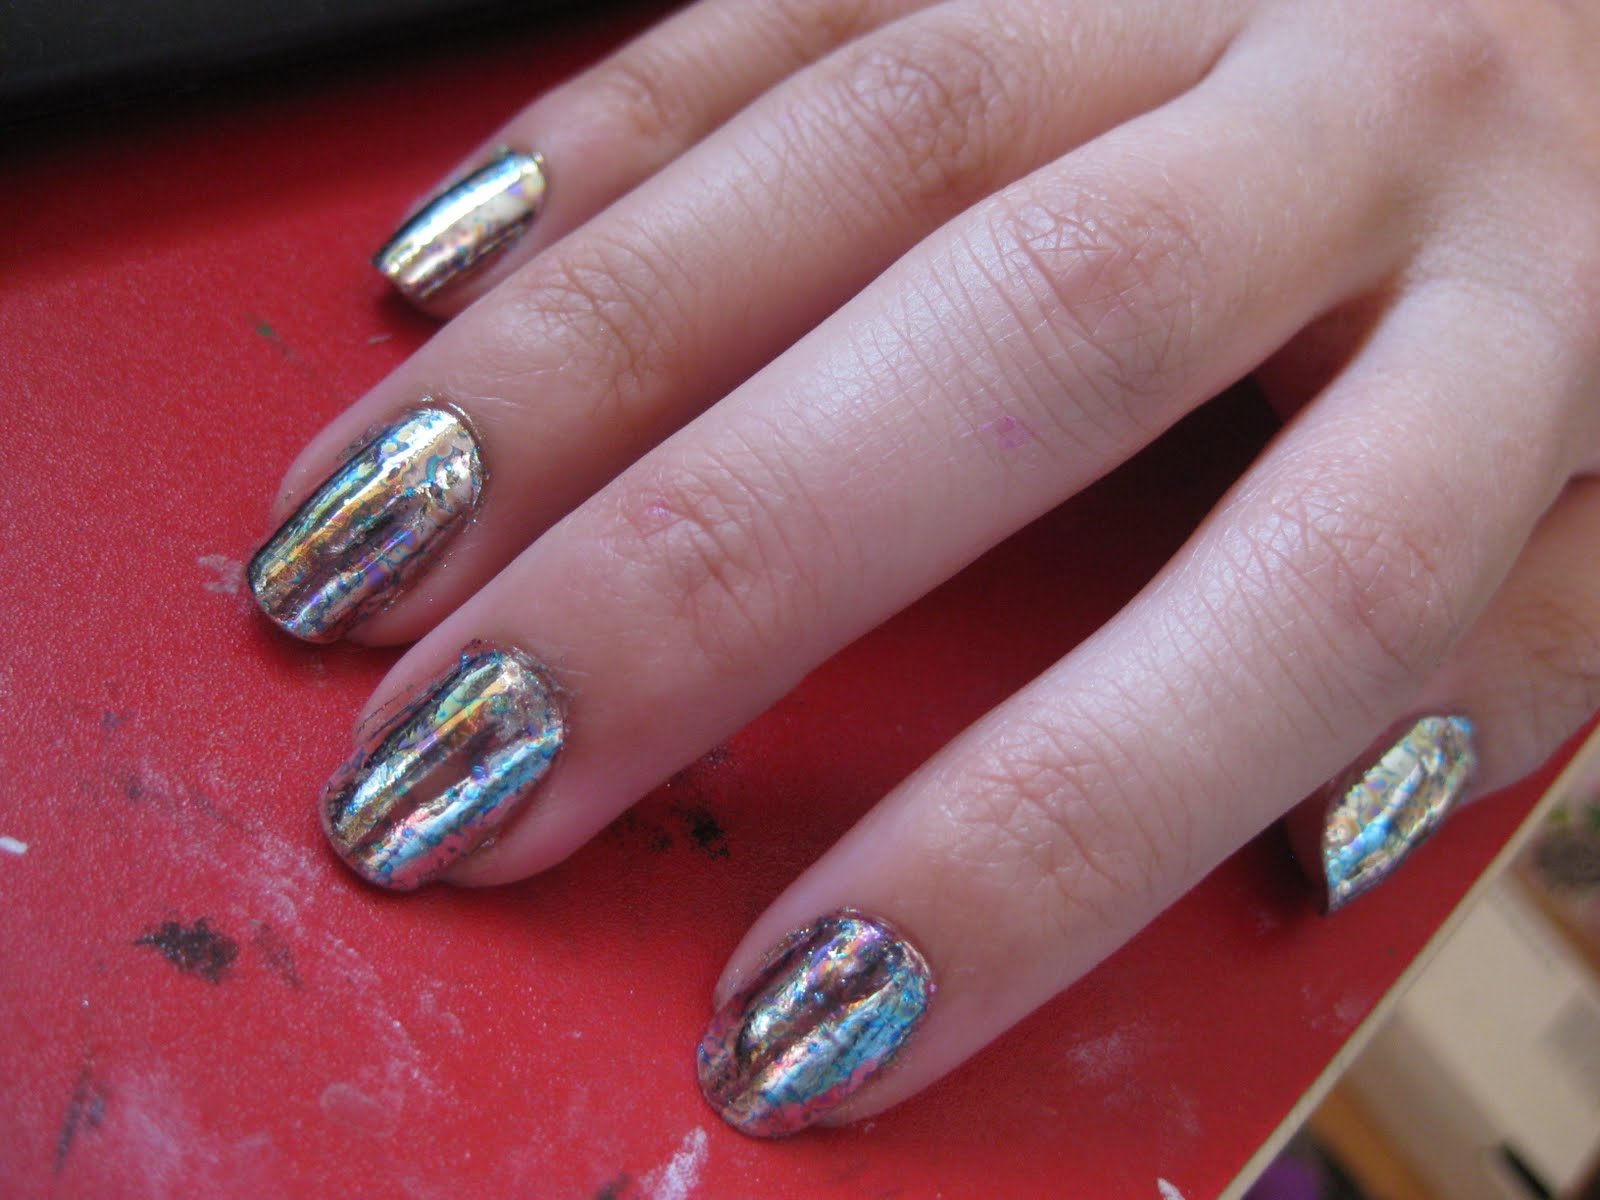 Crazy Abt Nails: Rest of the nail foils!